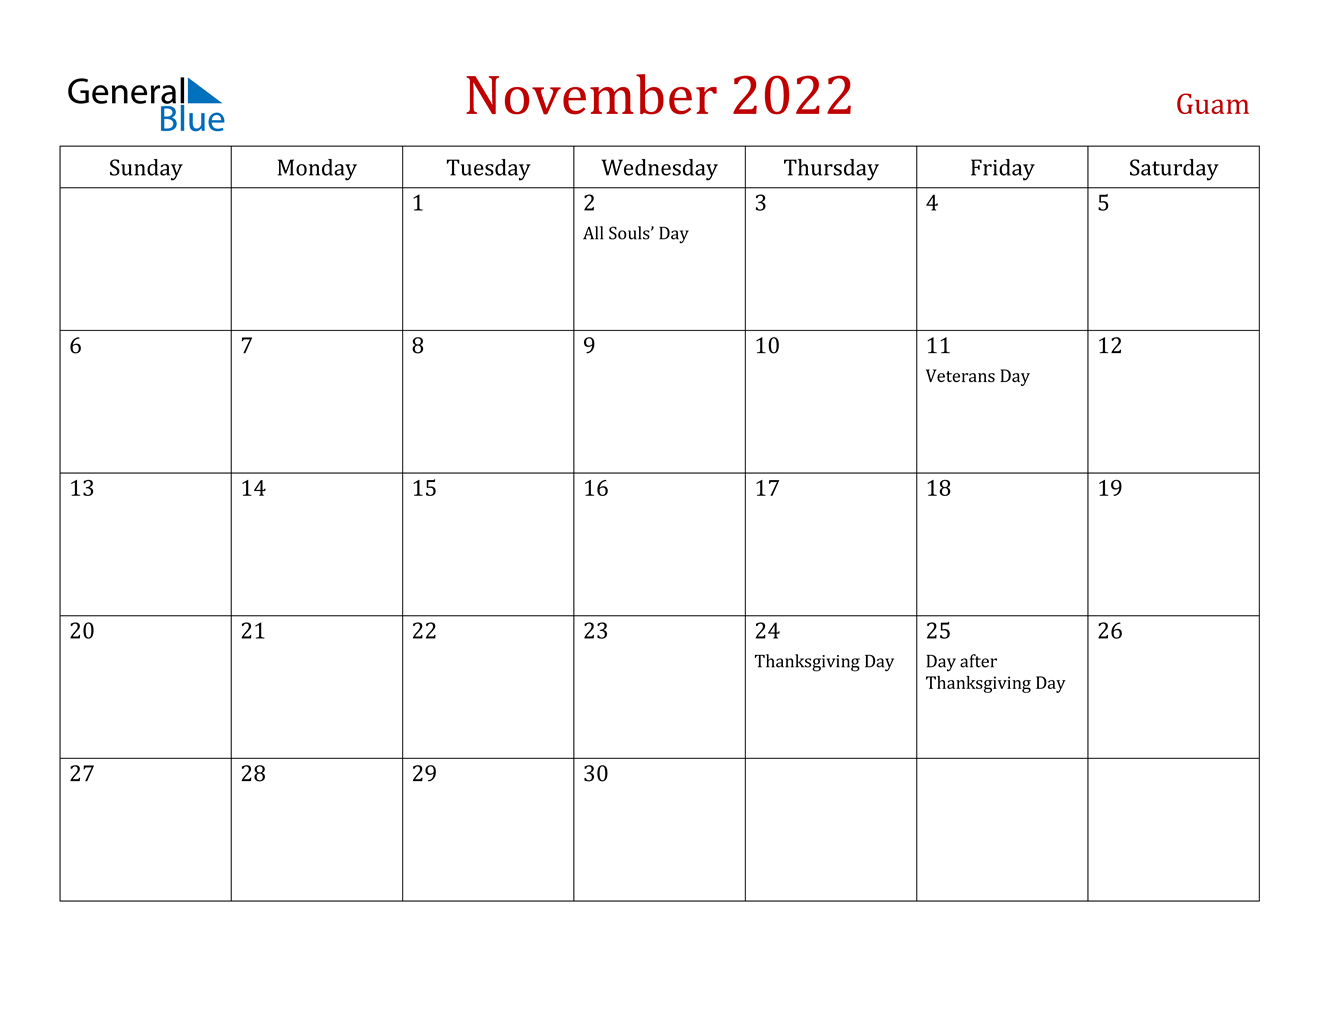 November 2022 Calendar - Guam